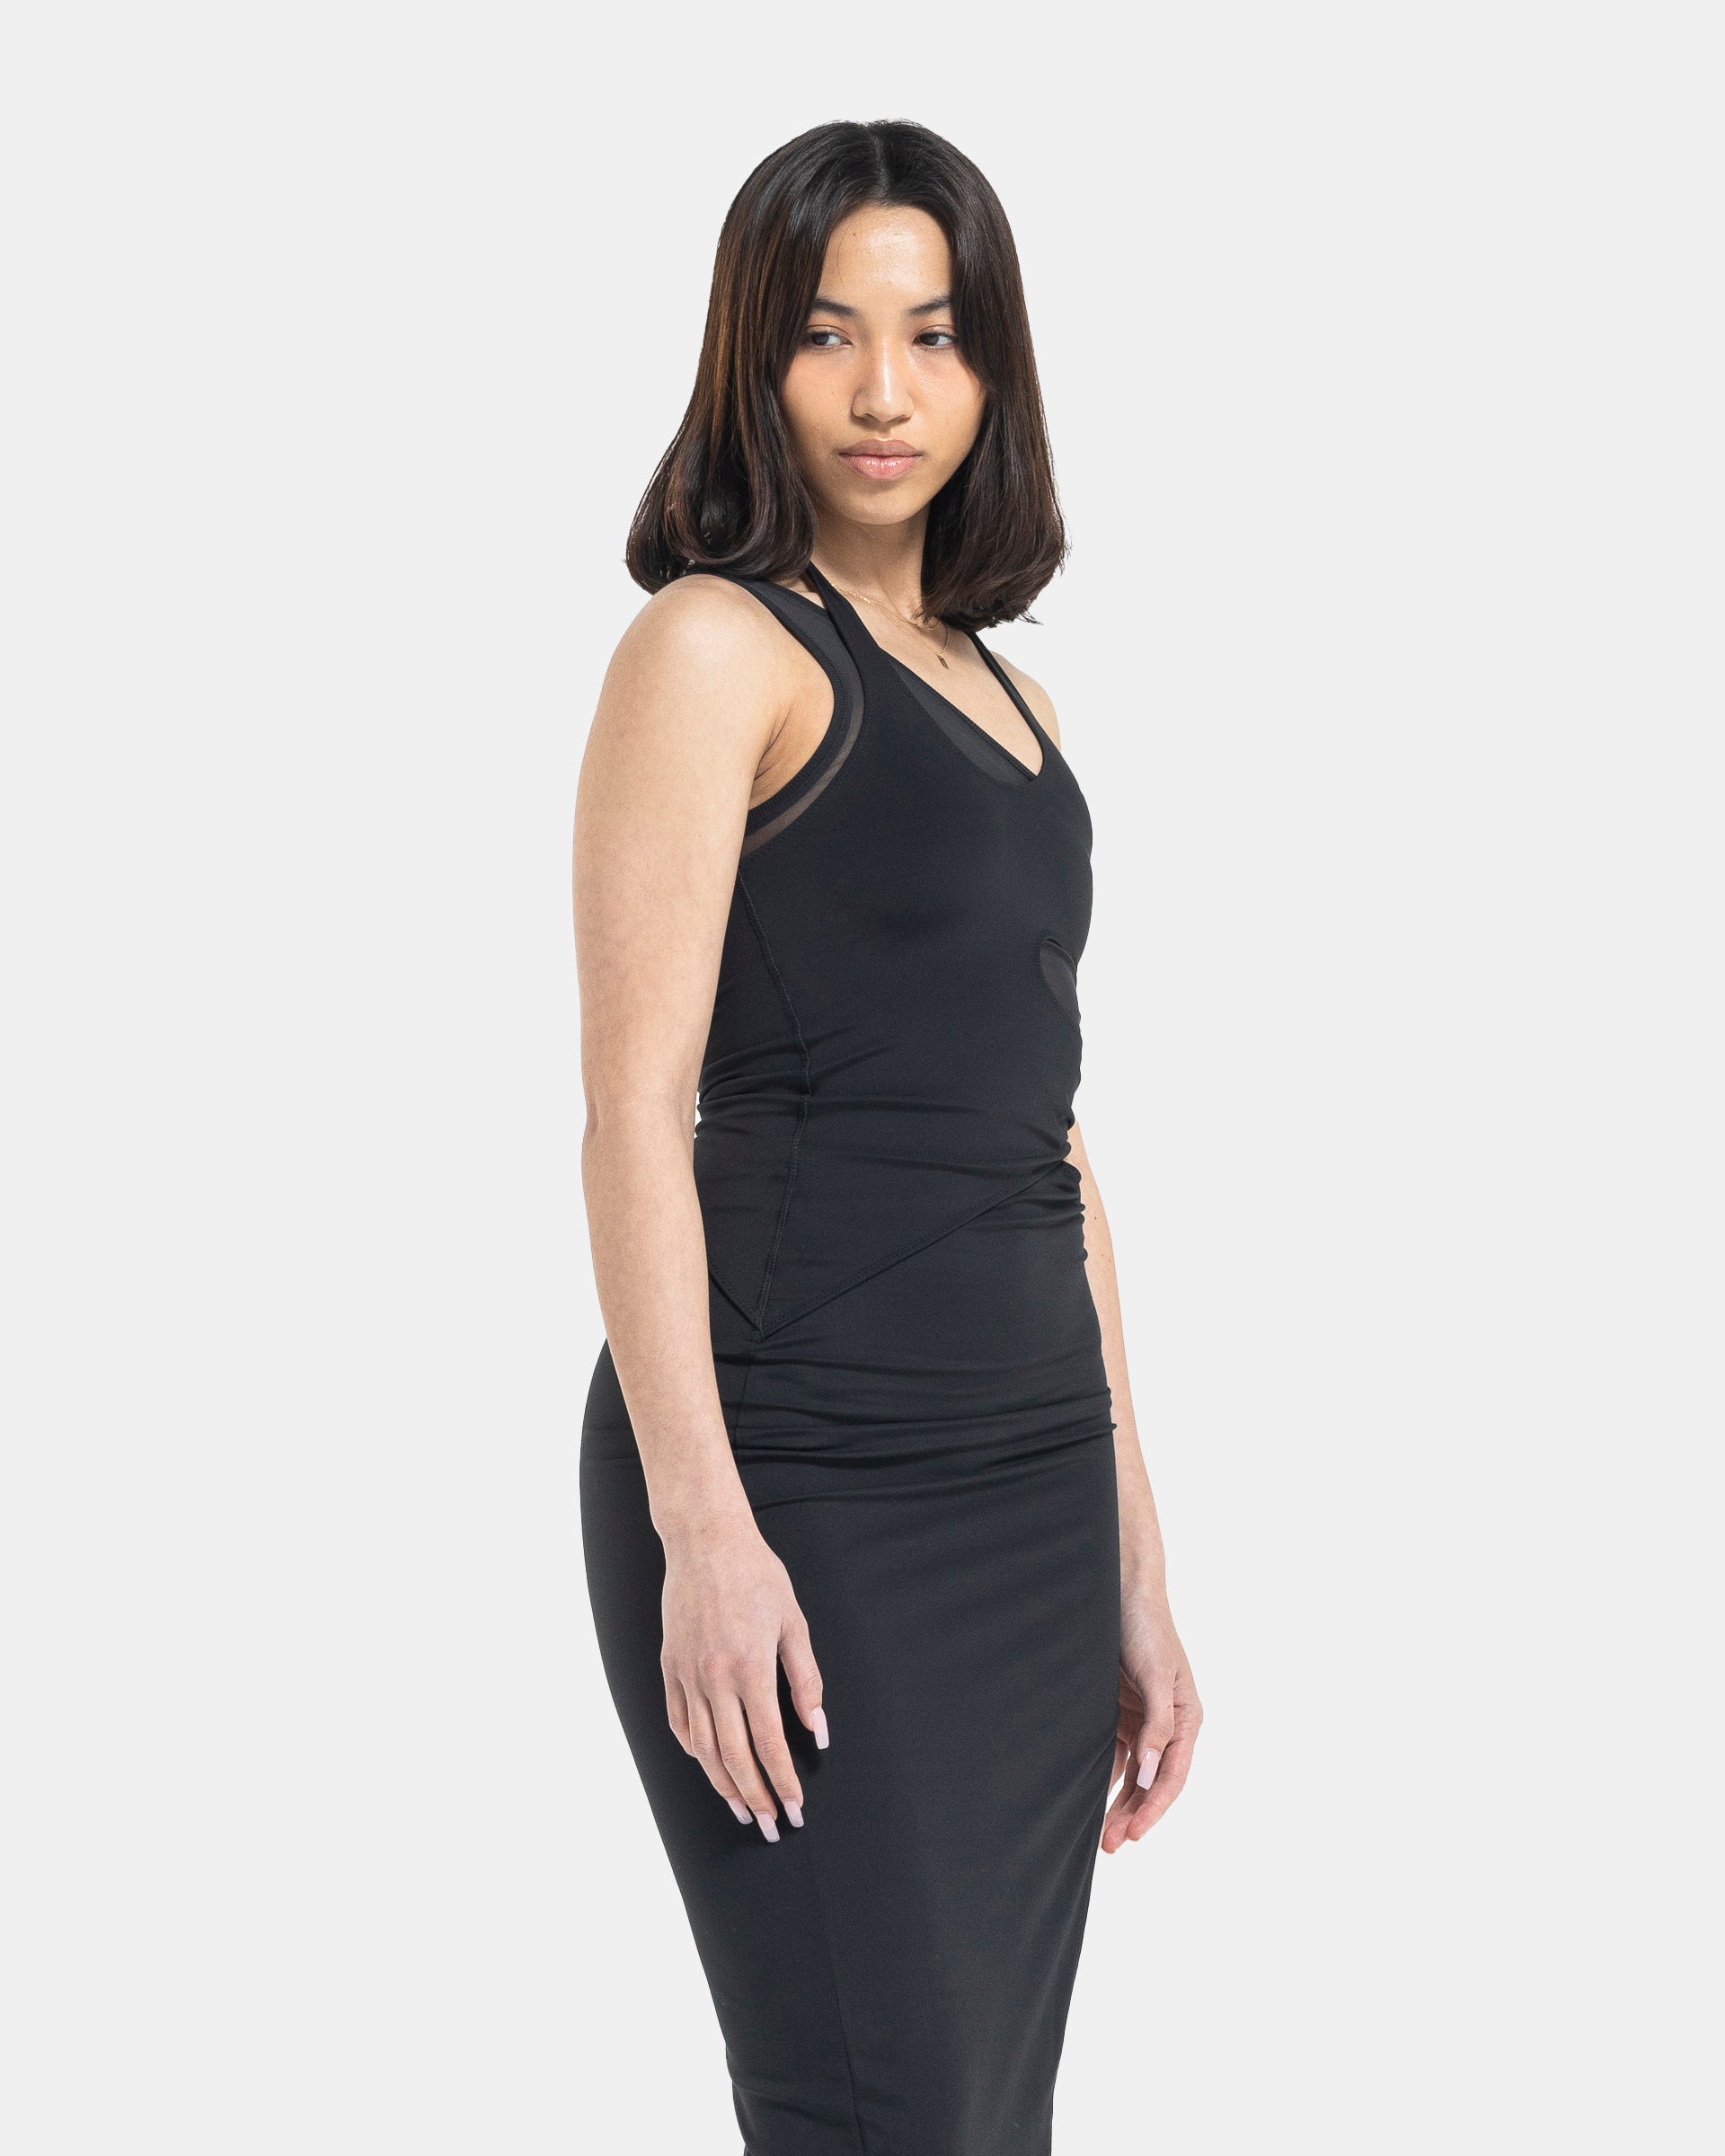 Female model wearing RUI x Adidas Black Dress on white background